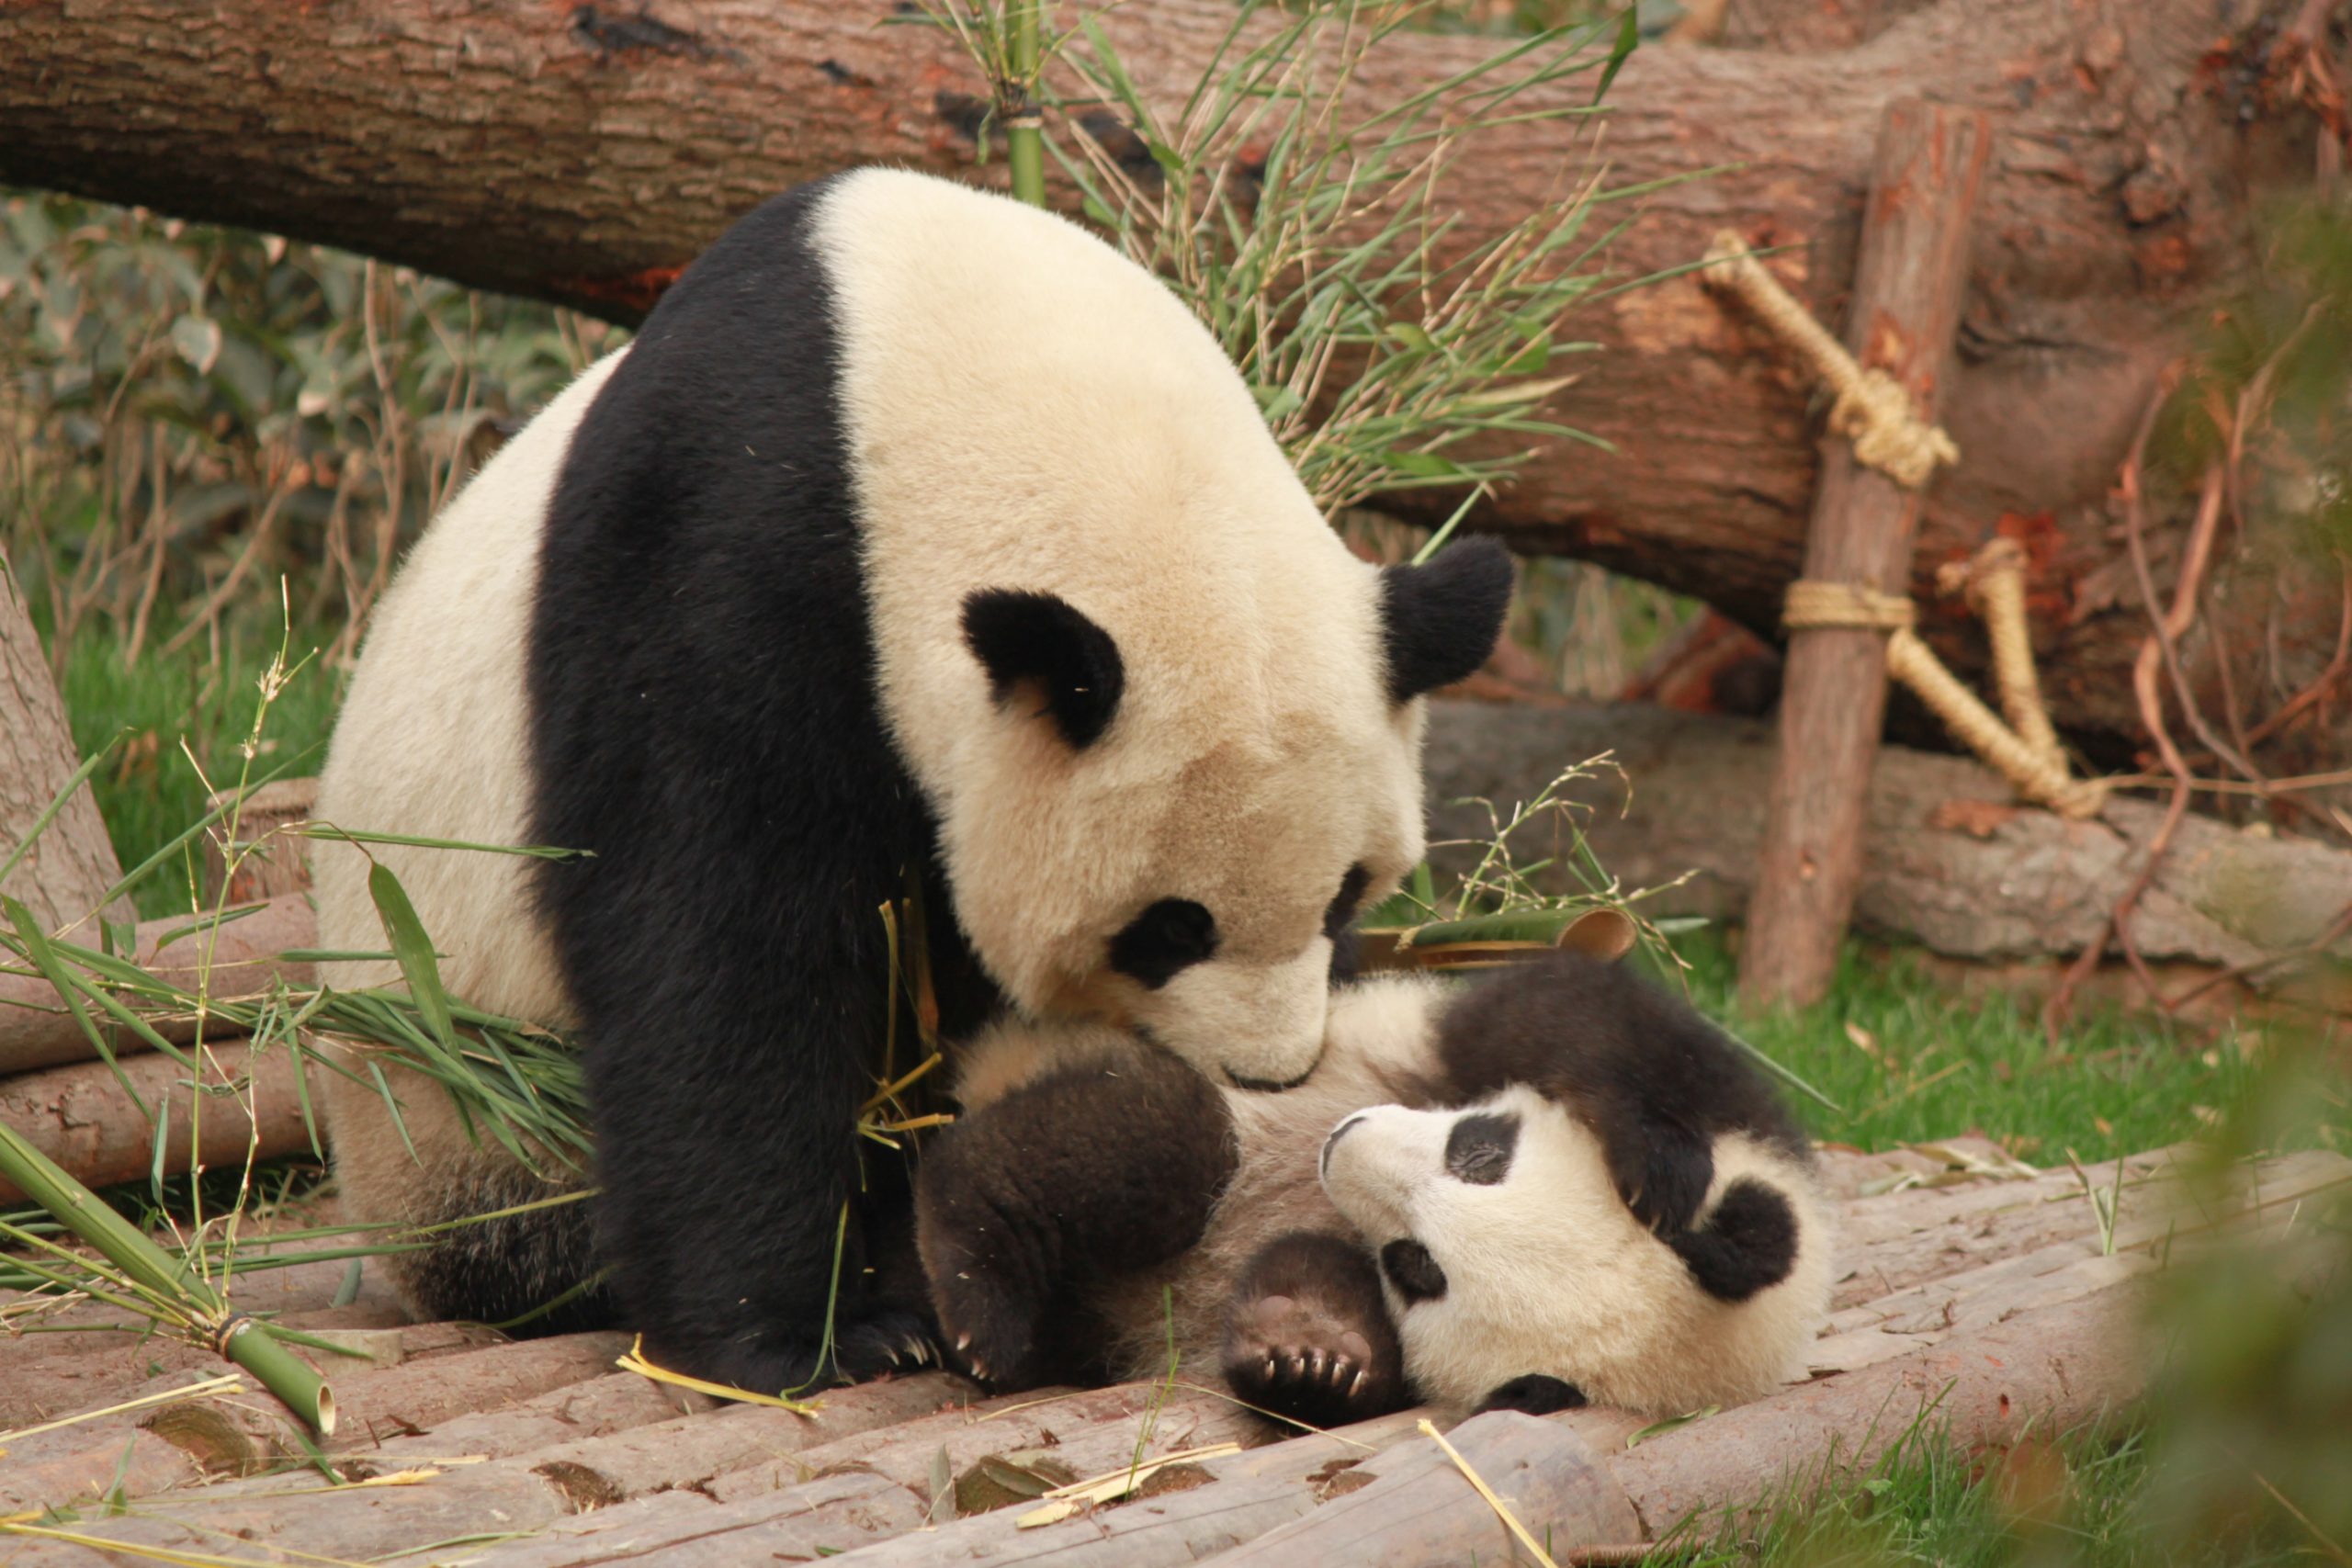 Name a New Baby Panda